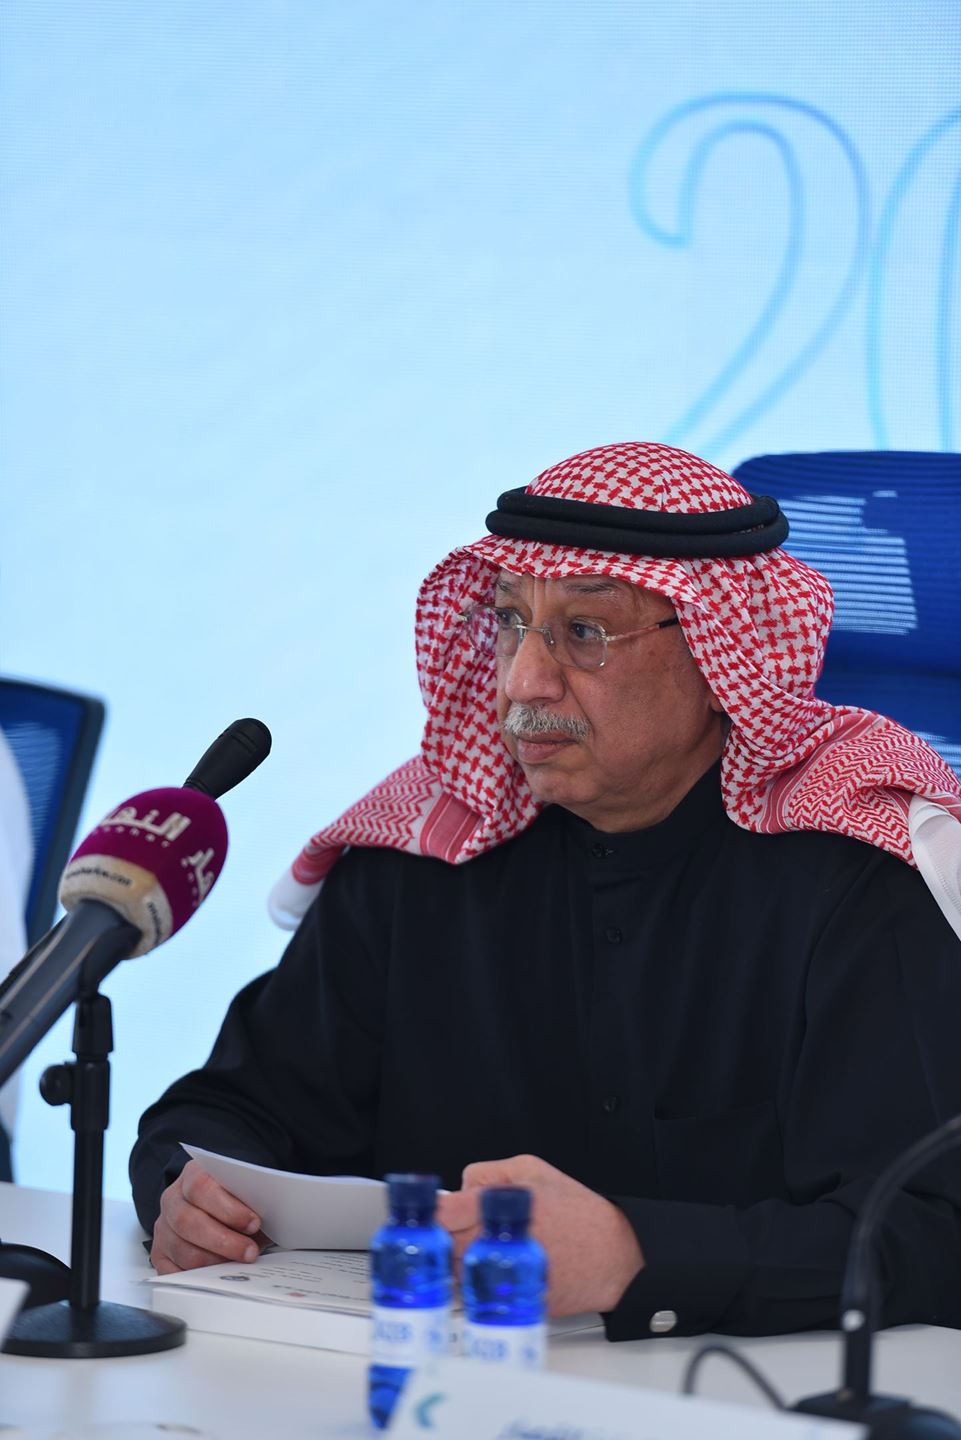 Al-Jarrah: KIB achieved positive financial results despite geopolitical and financial challenges